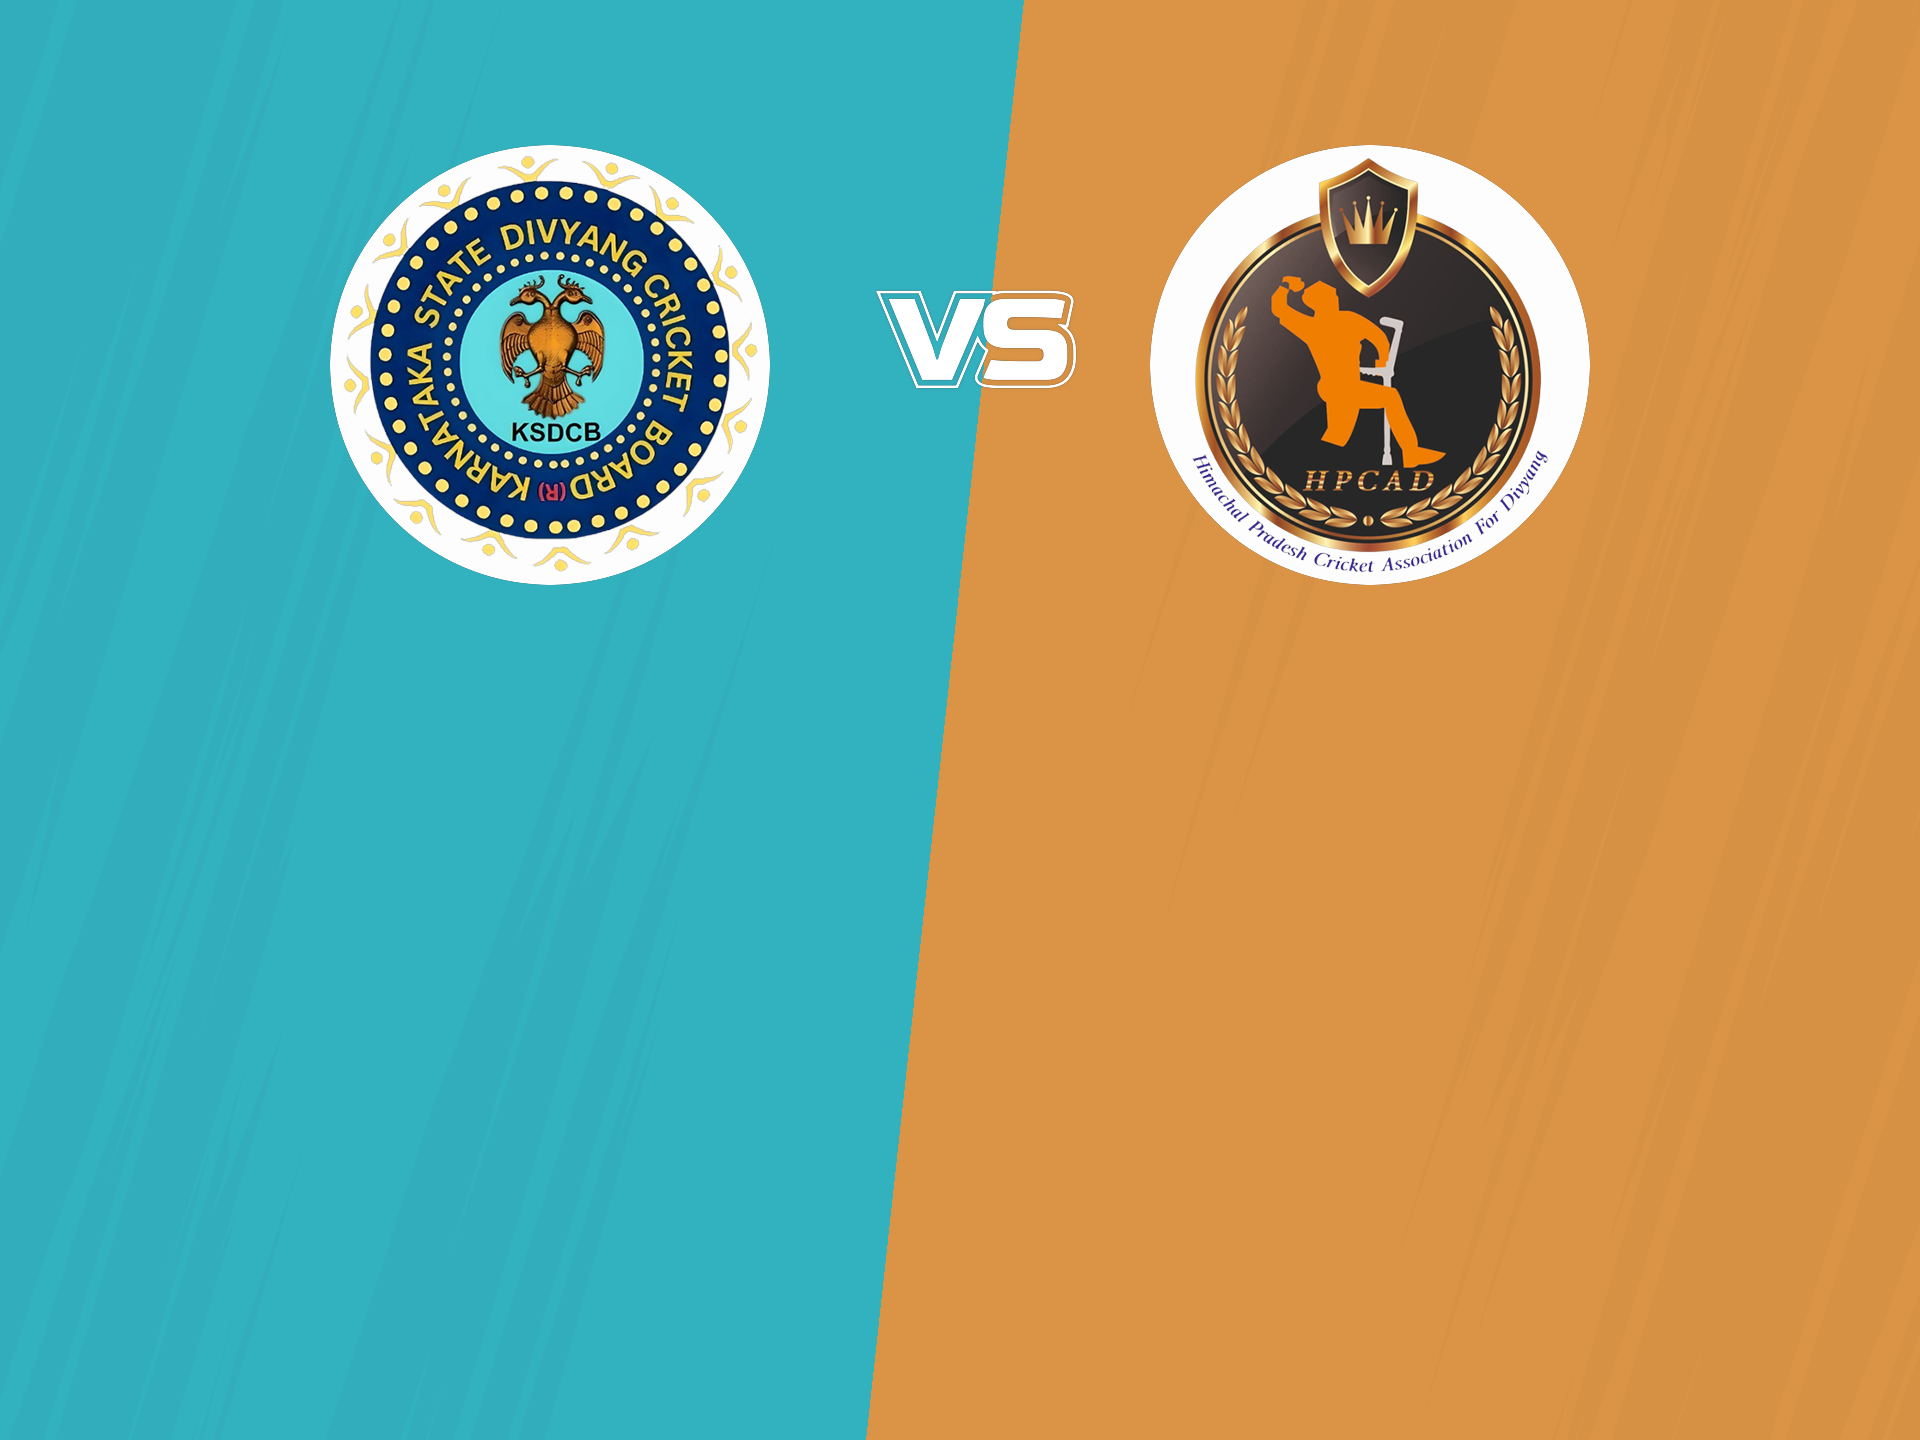 Sardar Patel National Divyang Svayam T20 Cup - SocioTab